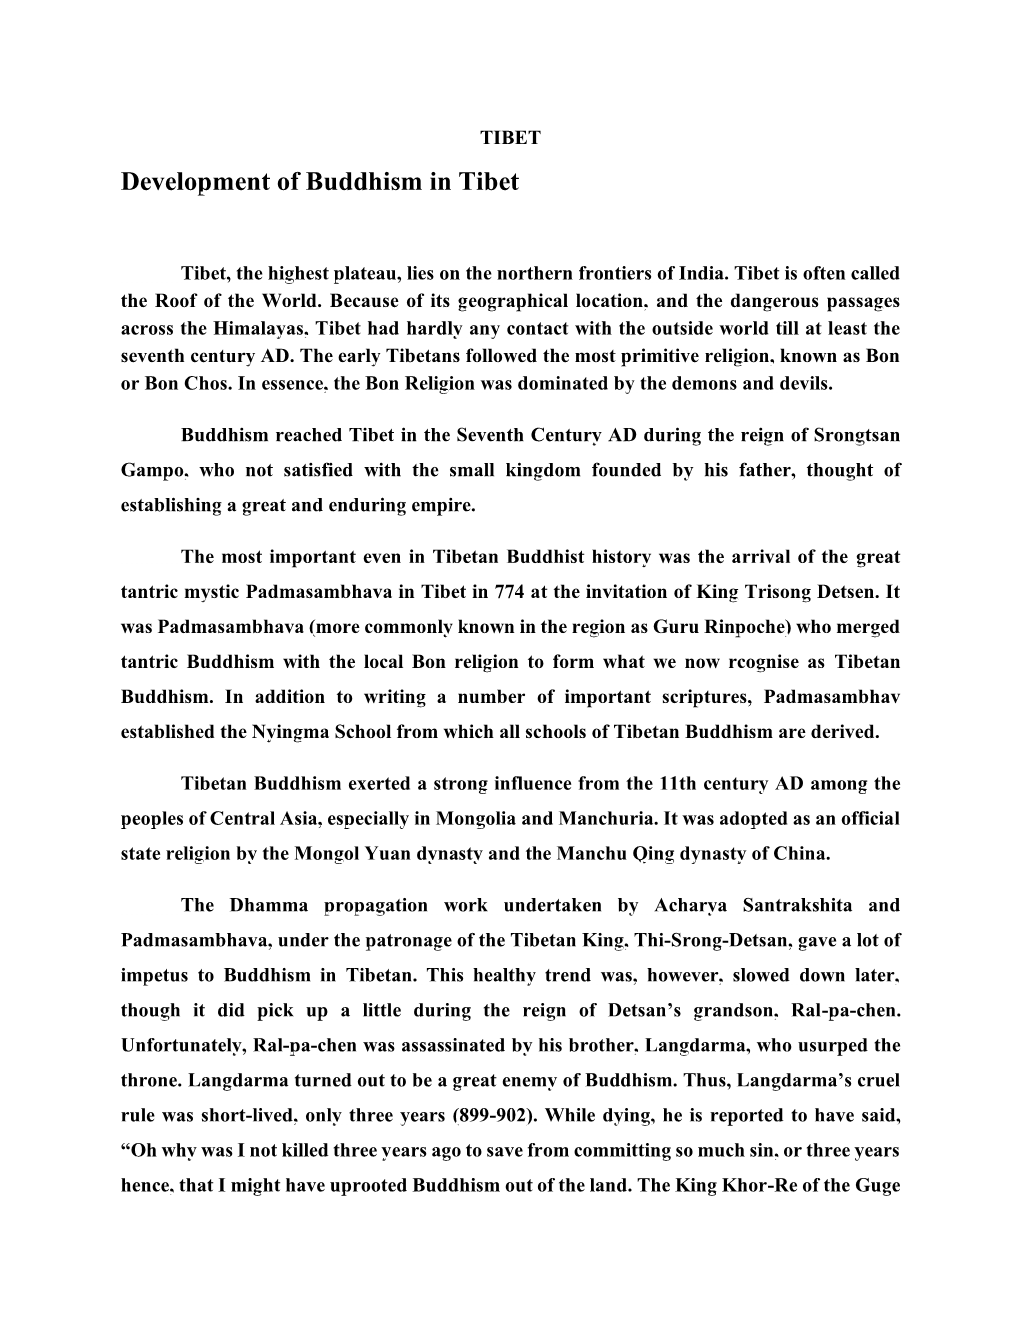 Development of Buddhism in Tibet